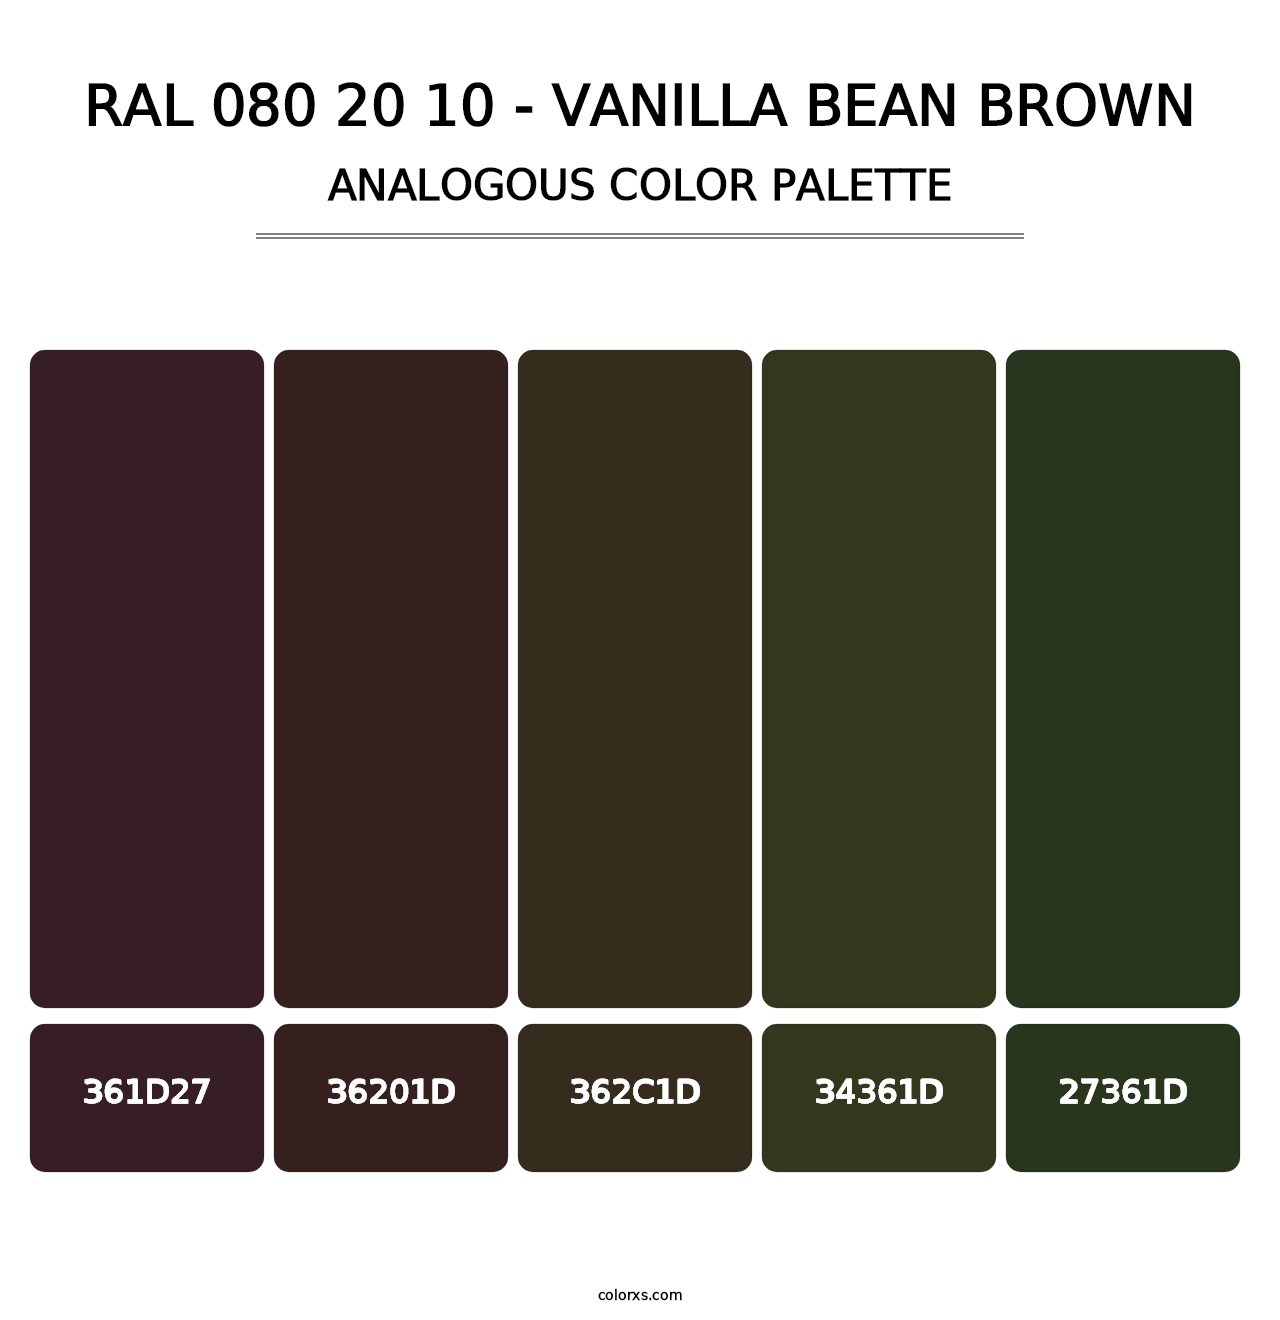 RAL 080 20 10 - Vanilla Bean Brown - Analogous Color Palette